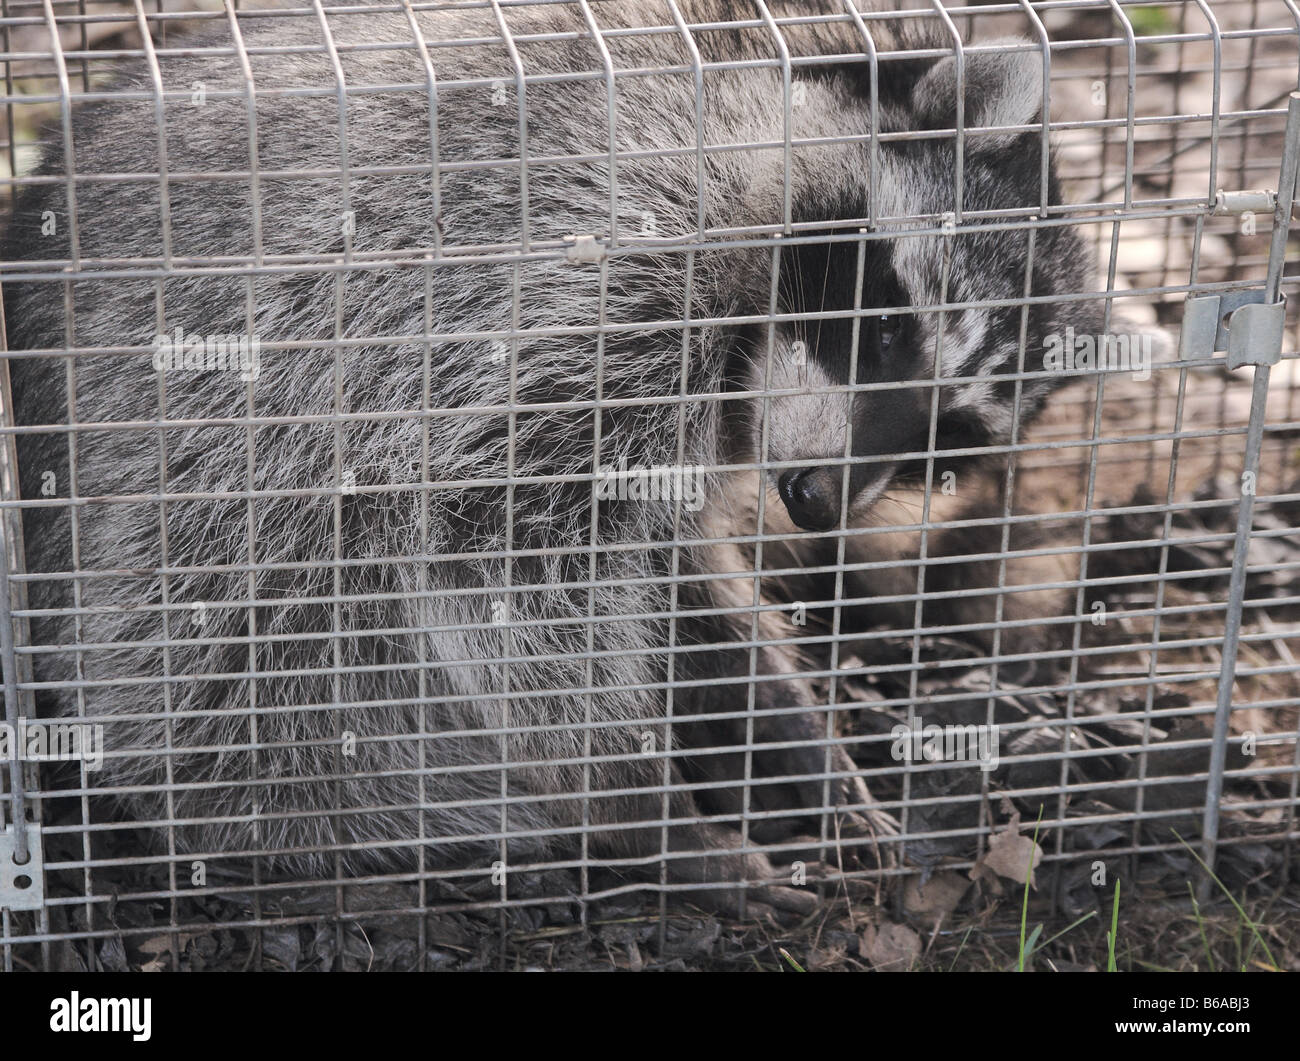 https://c8.alamy.com/comp/B6ABJ3/a-raccoon-caught-in-a-humane-trap-B6ABJ3.jpg